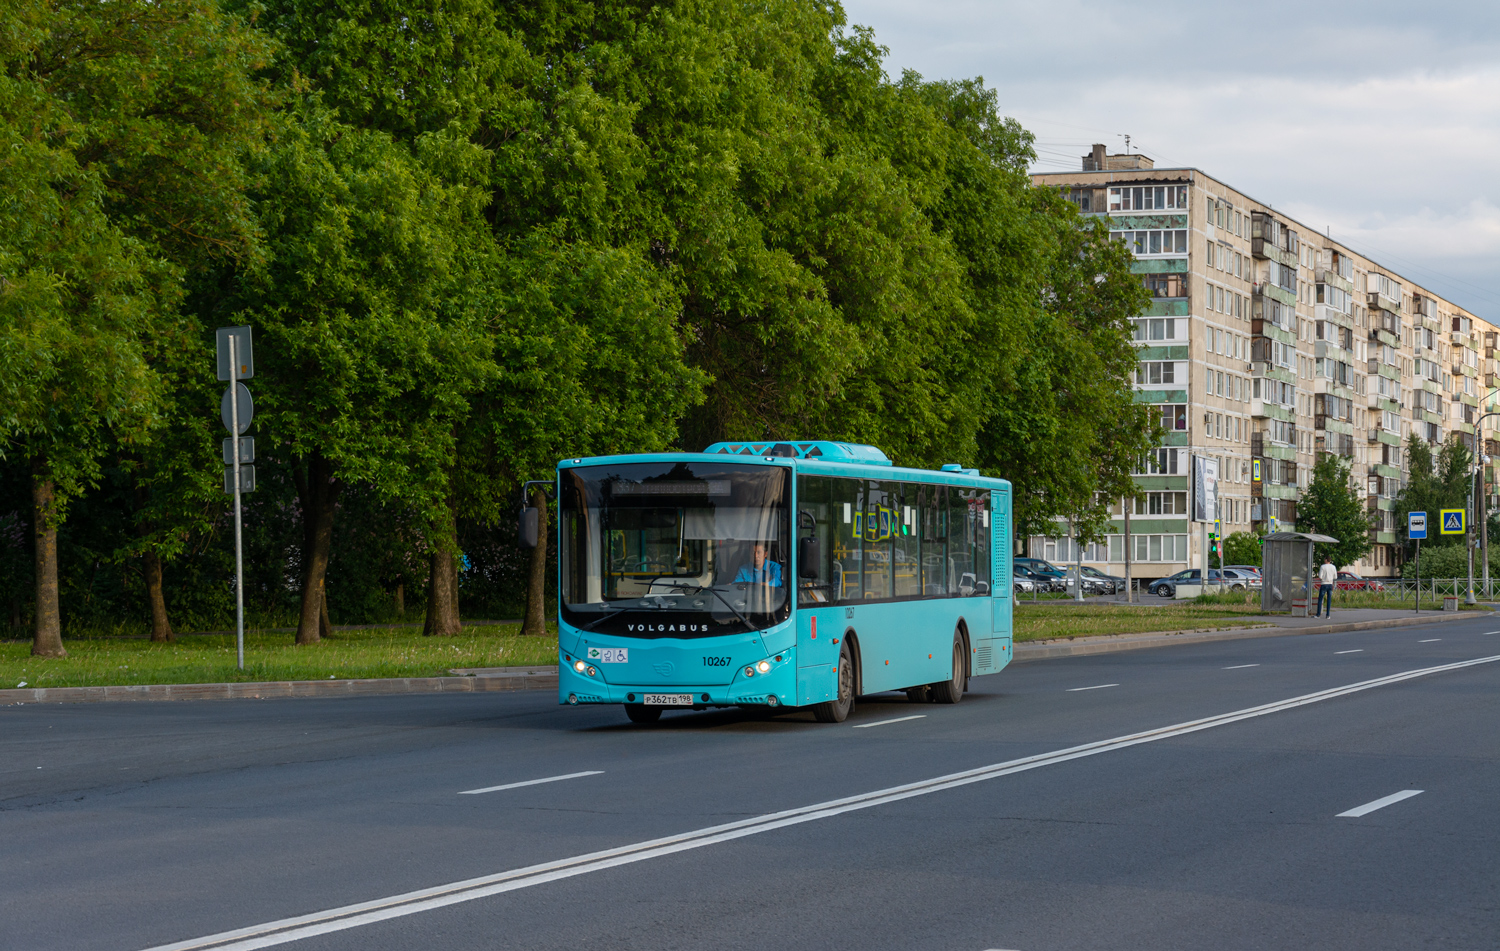 Saint Petersburg, Volgabus-5270.G4 (LNG) # 10267